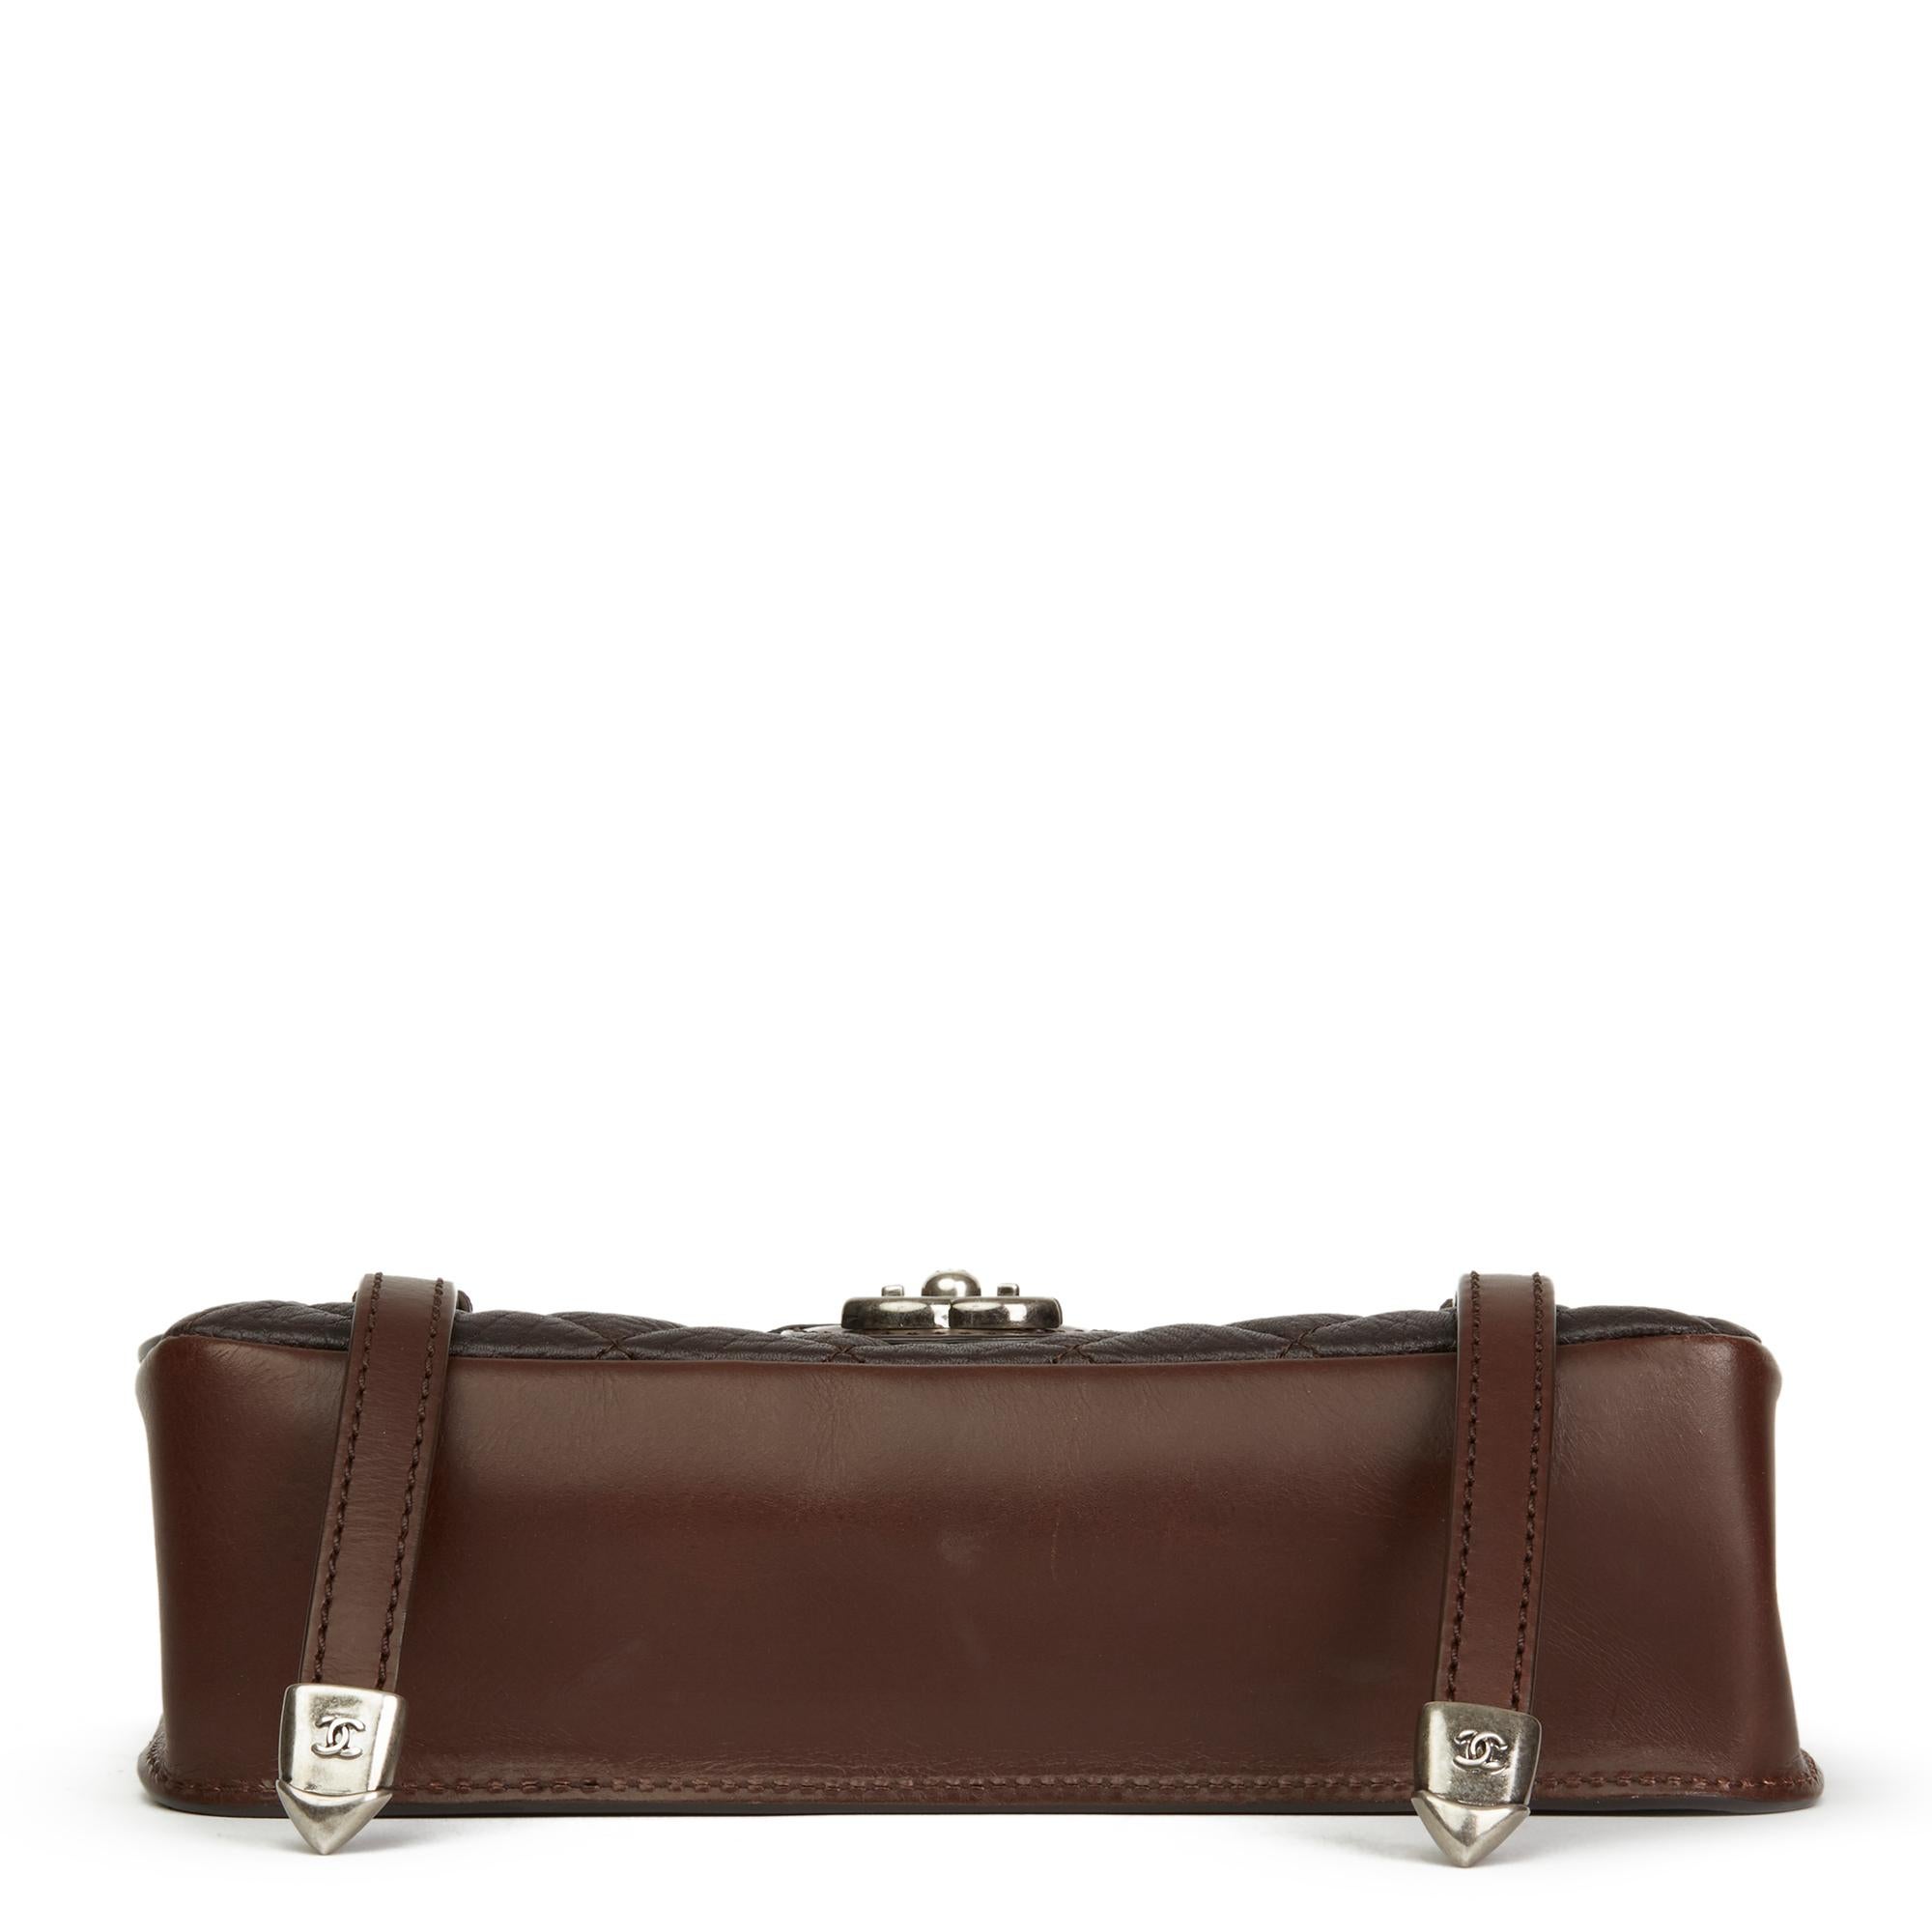 Women's 2014 Chanel Brown Studded Calfskin Leather Paris-Dallas Studded Buckle Flap Bag